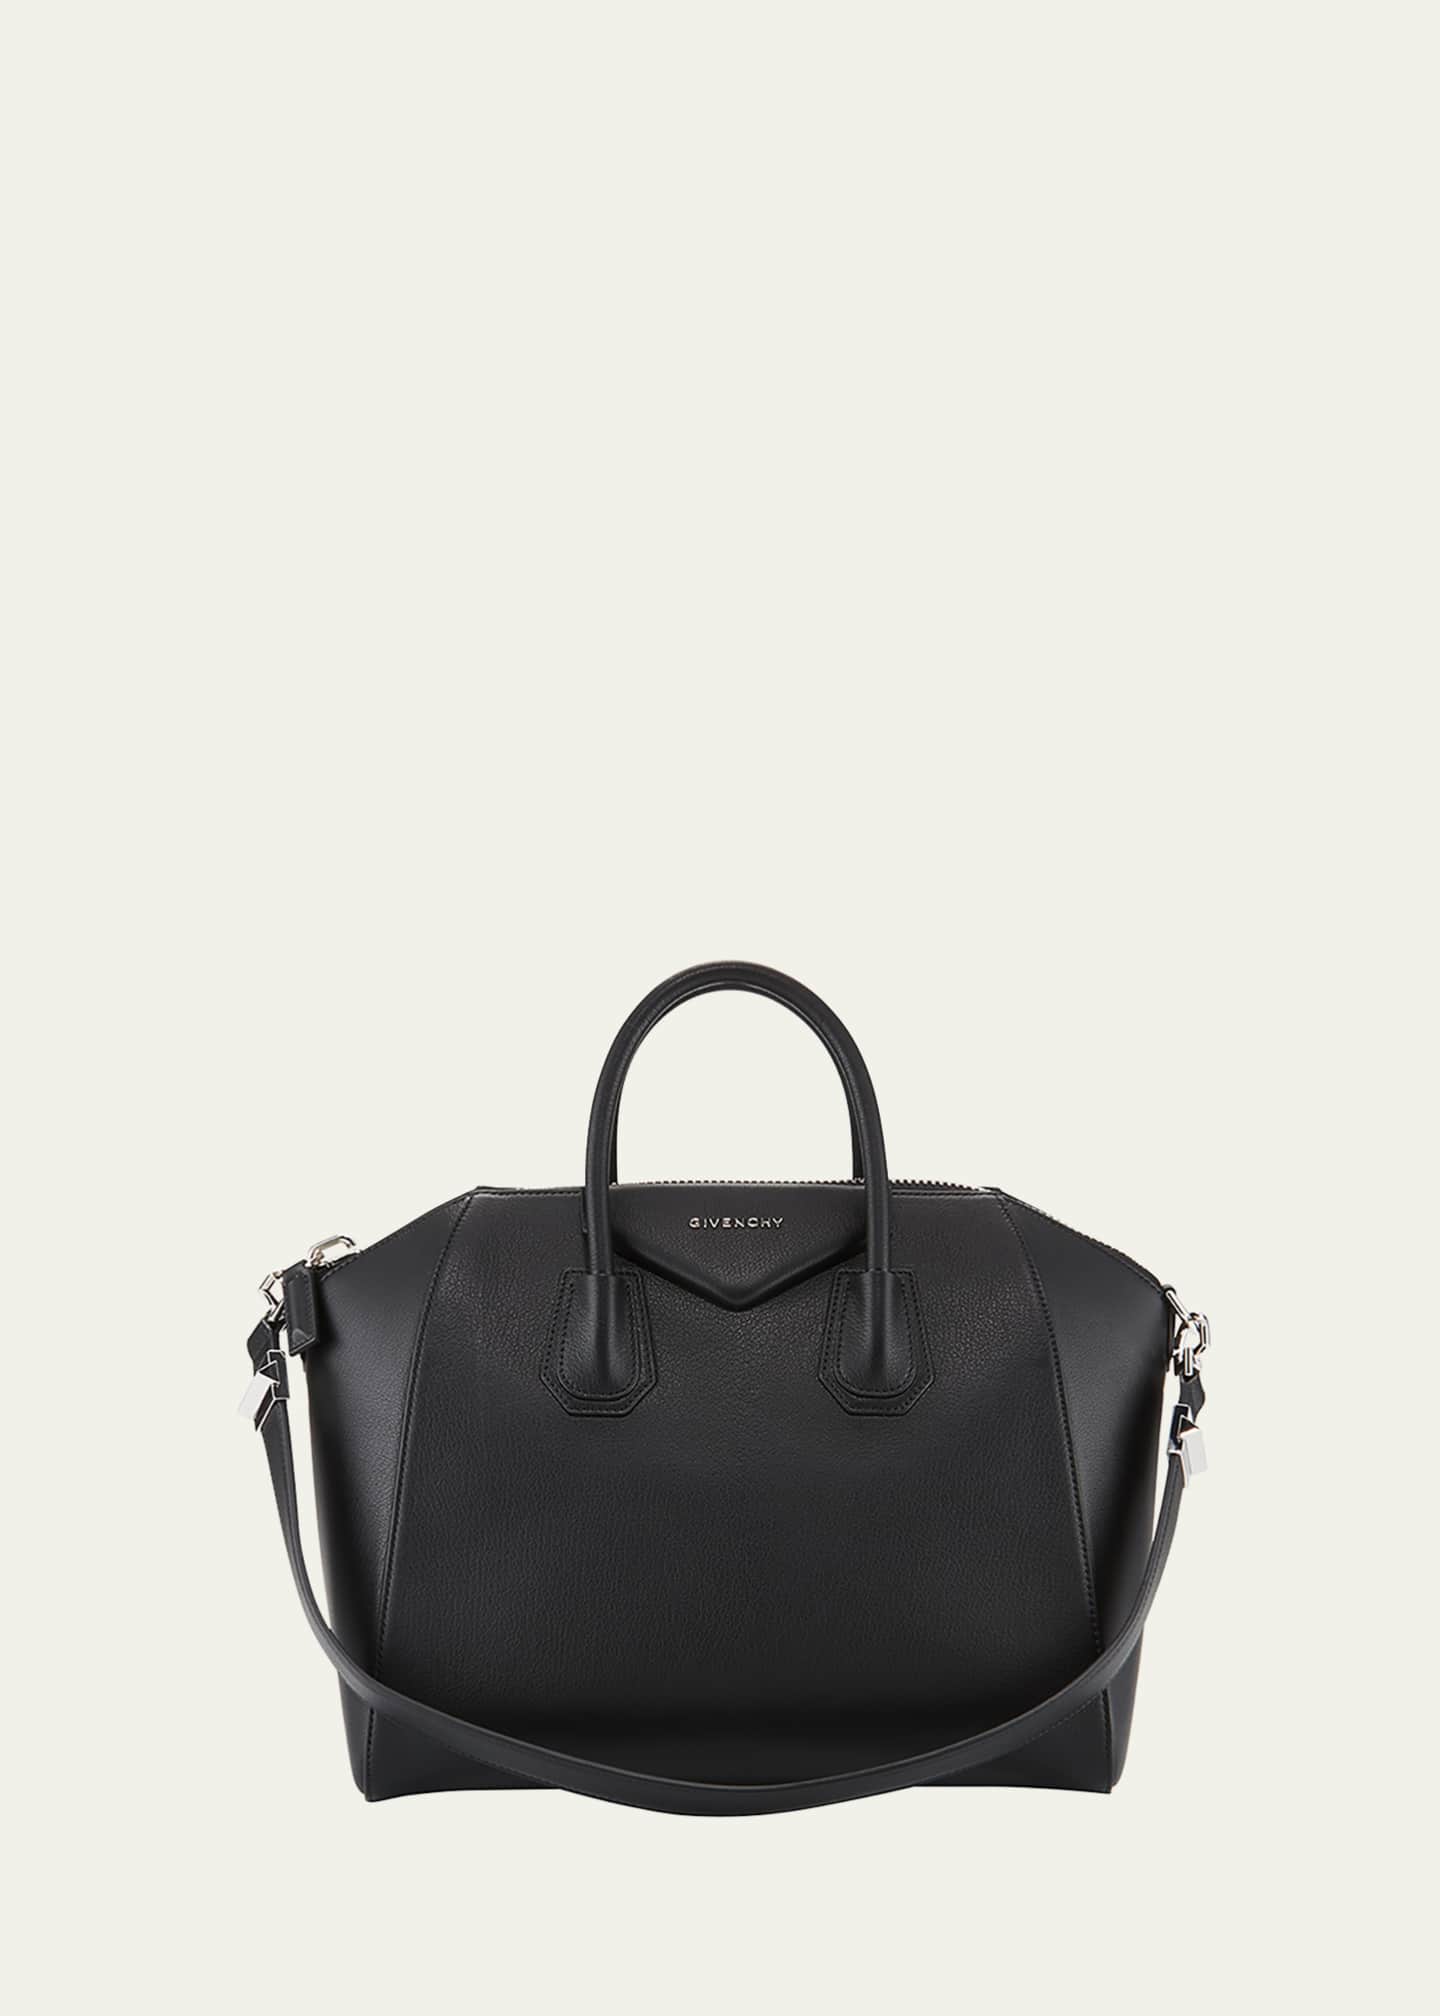 Givenchy - Women's Antigona Handbag Top Handle Bag - Black - Leather